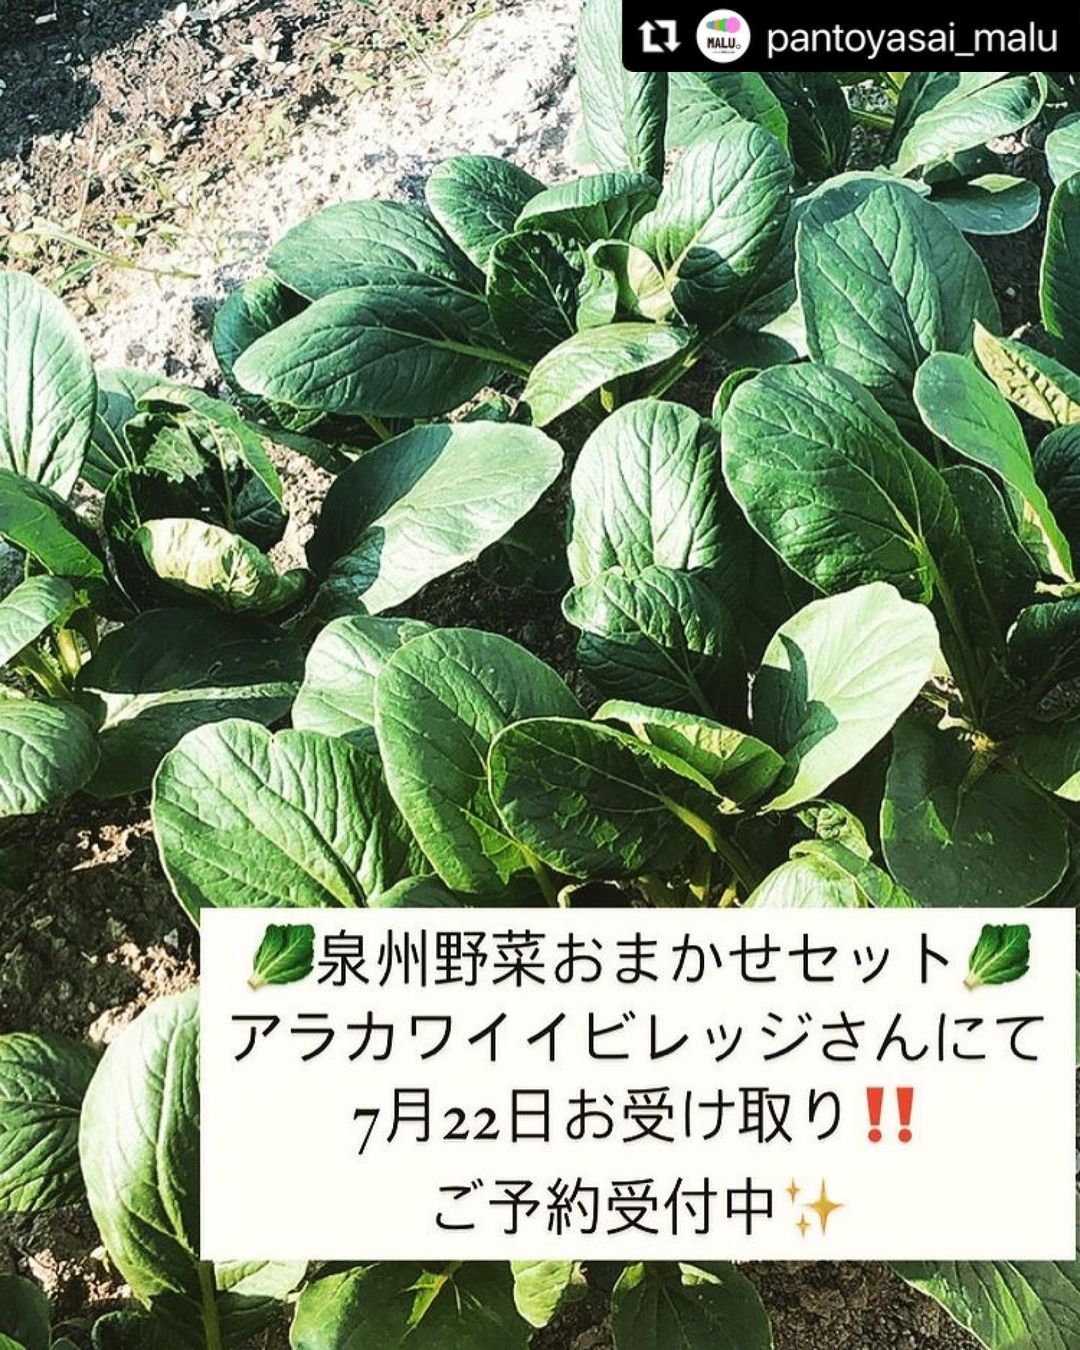 ARAKAWA ii VILLAGE 7/22のお野菜セットご予約承り中！！